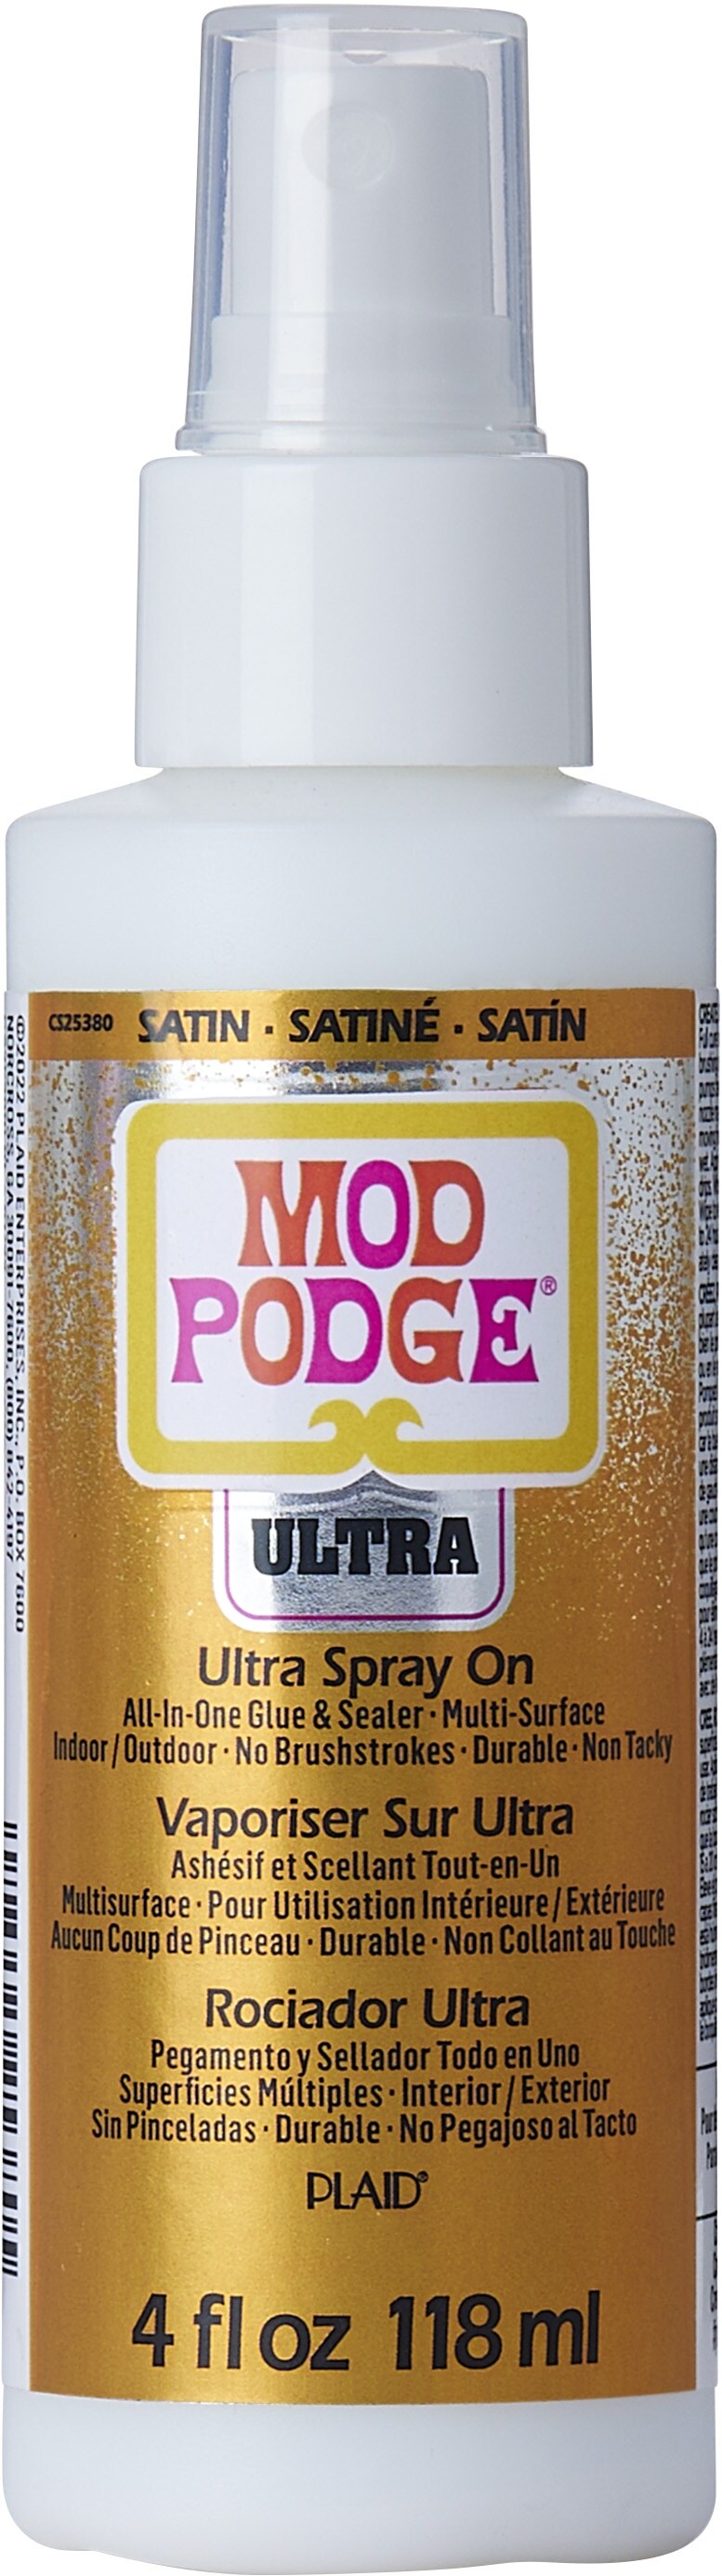 Mod Podge Ultra Spray On 4oz-Satin